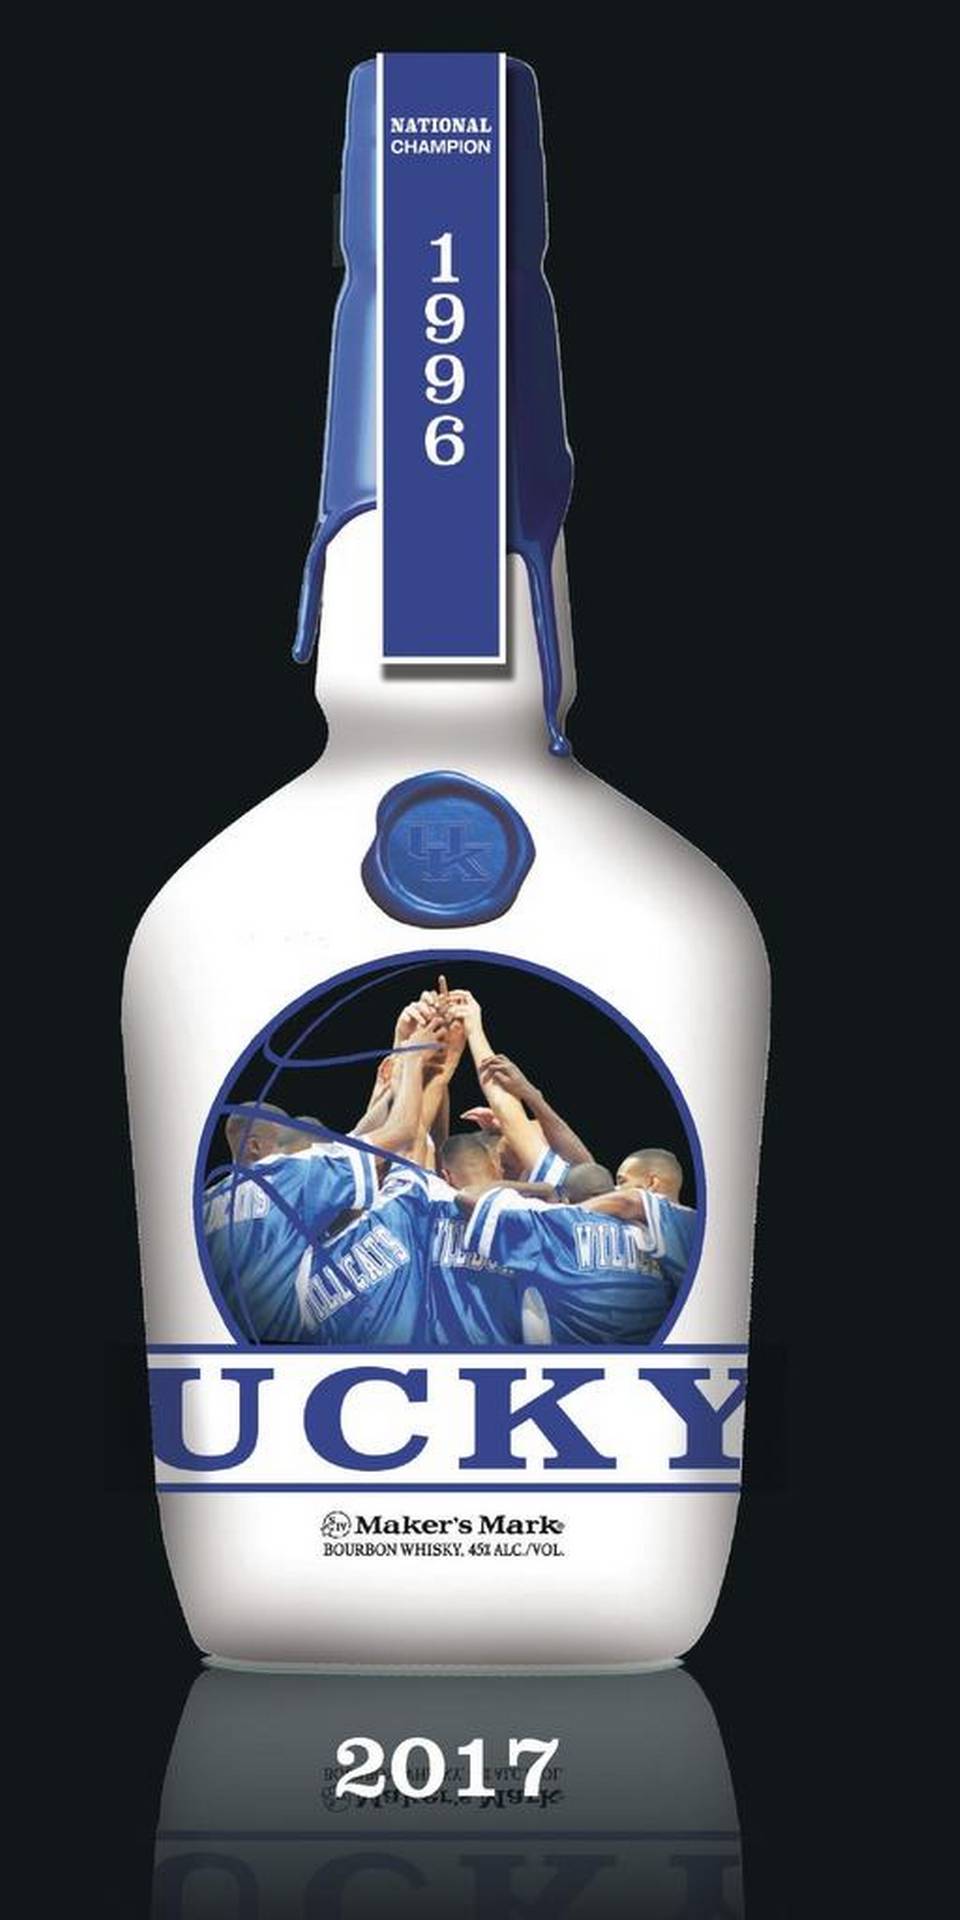 Maker's Mark 2019 Keeneland bottle spotlights 2012 UK NCAA championship, News